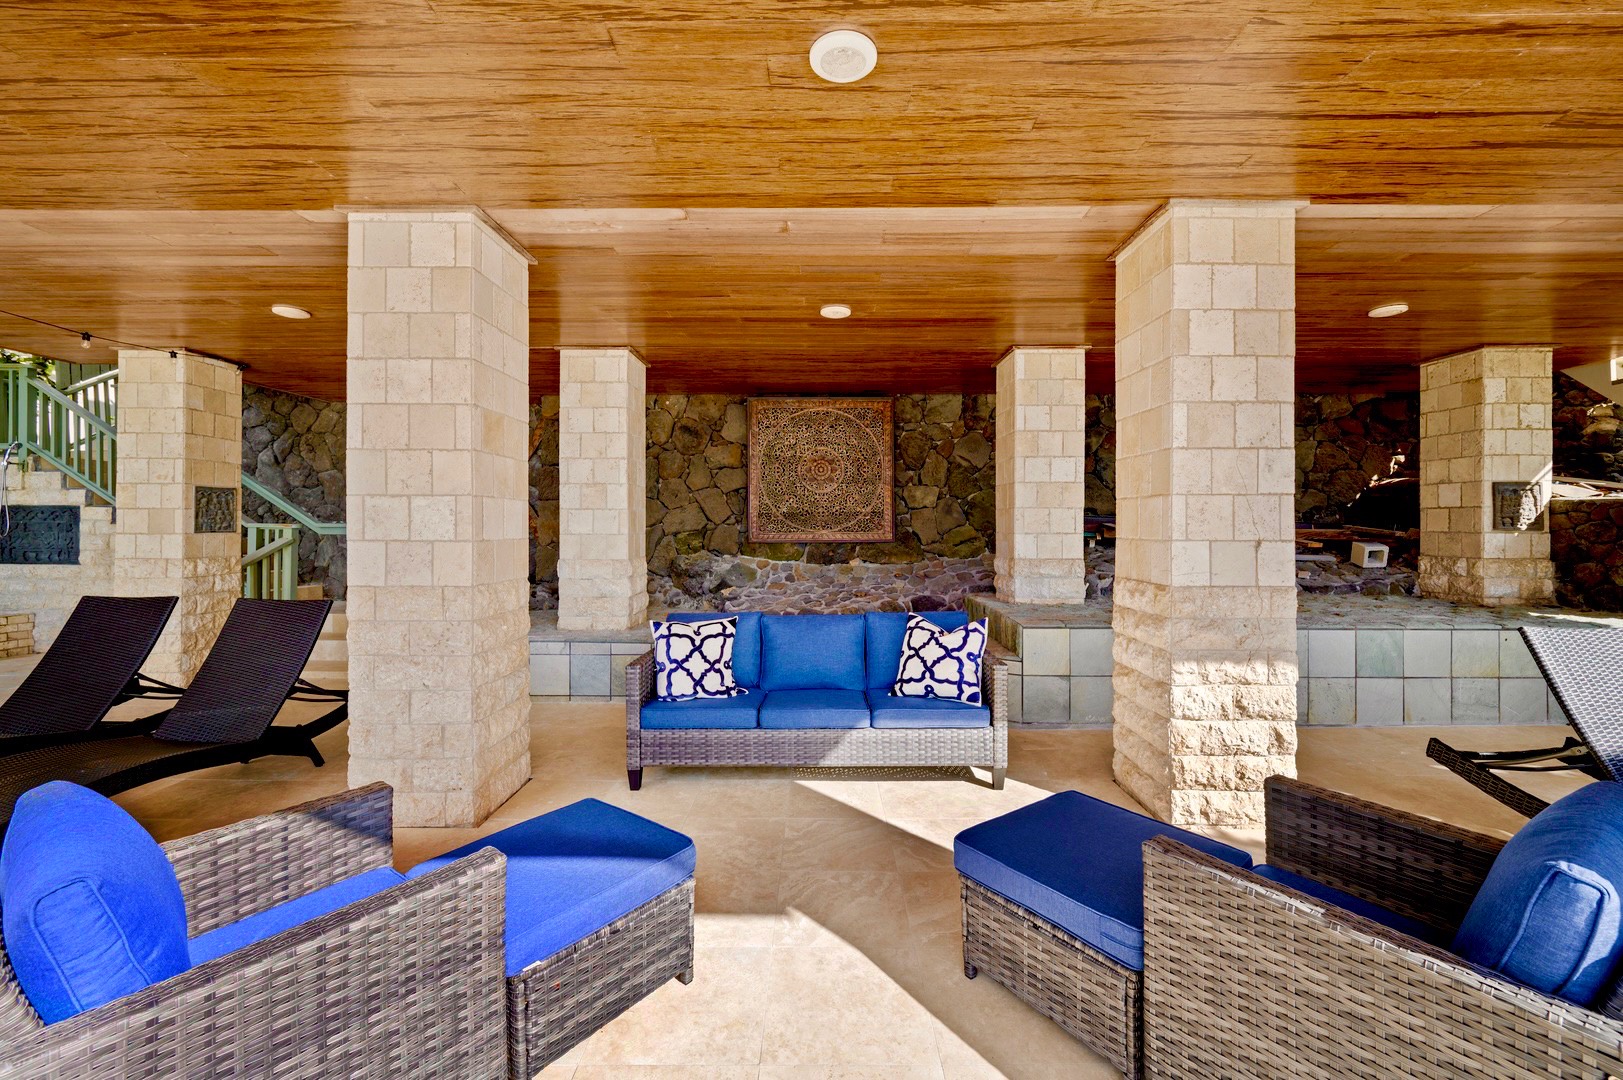 Honolulu Vacation Rentals, Kaiko'o Villa** - Beautiful outdoor space to lounge